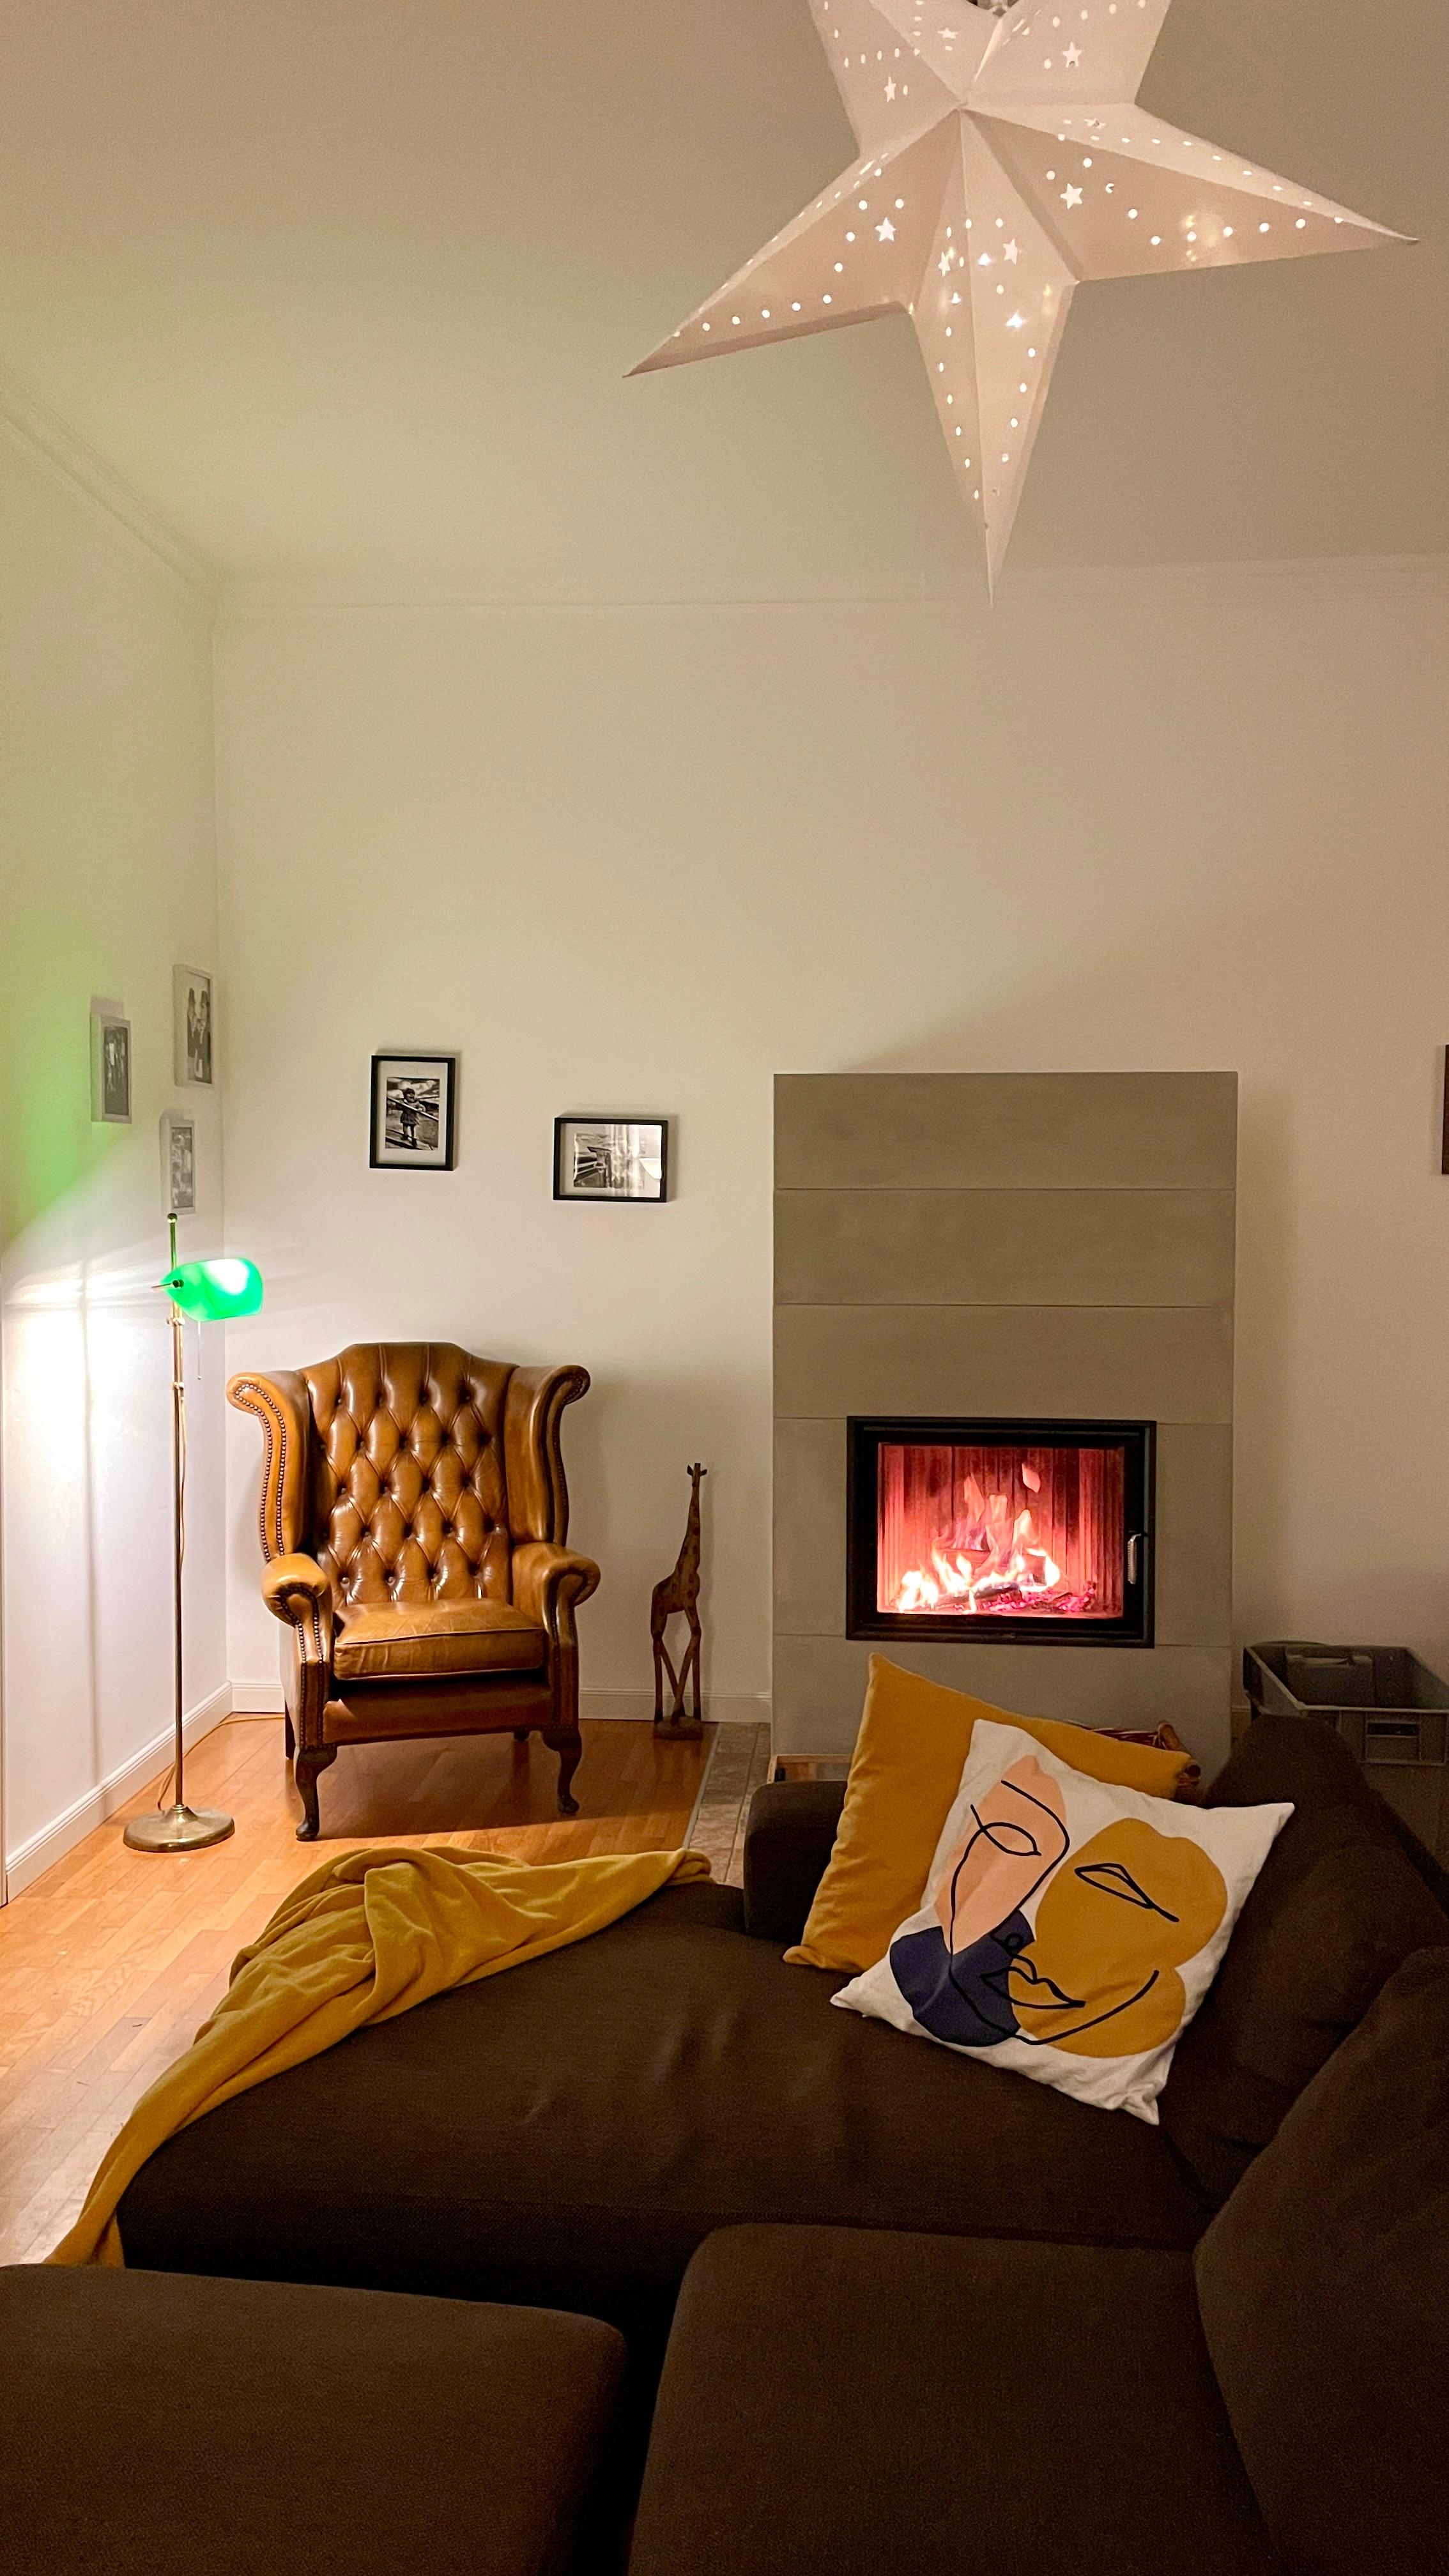 #cozyhome #wohnzimmer #kaminofen #couch #altersessel